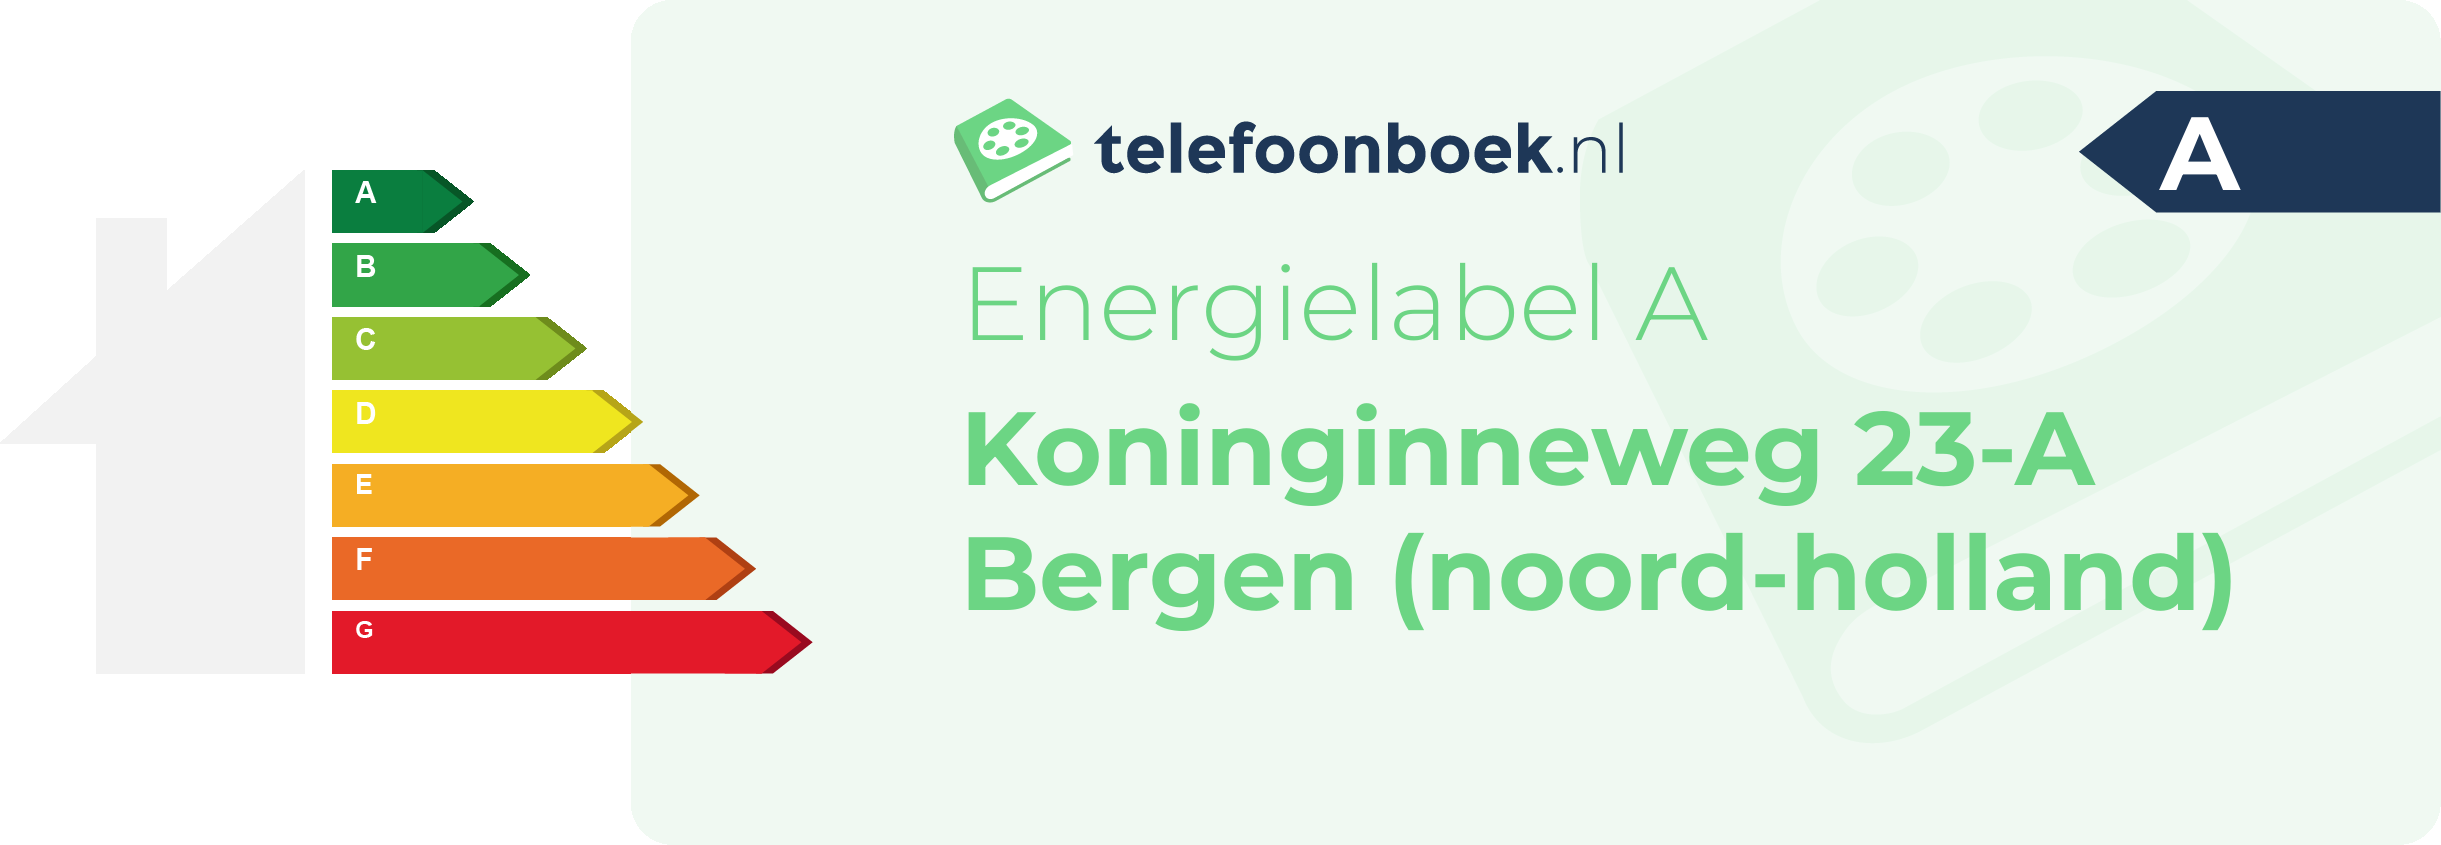 Energielabel Koninginneweg 23-A Bergen (Noord-Holland)